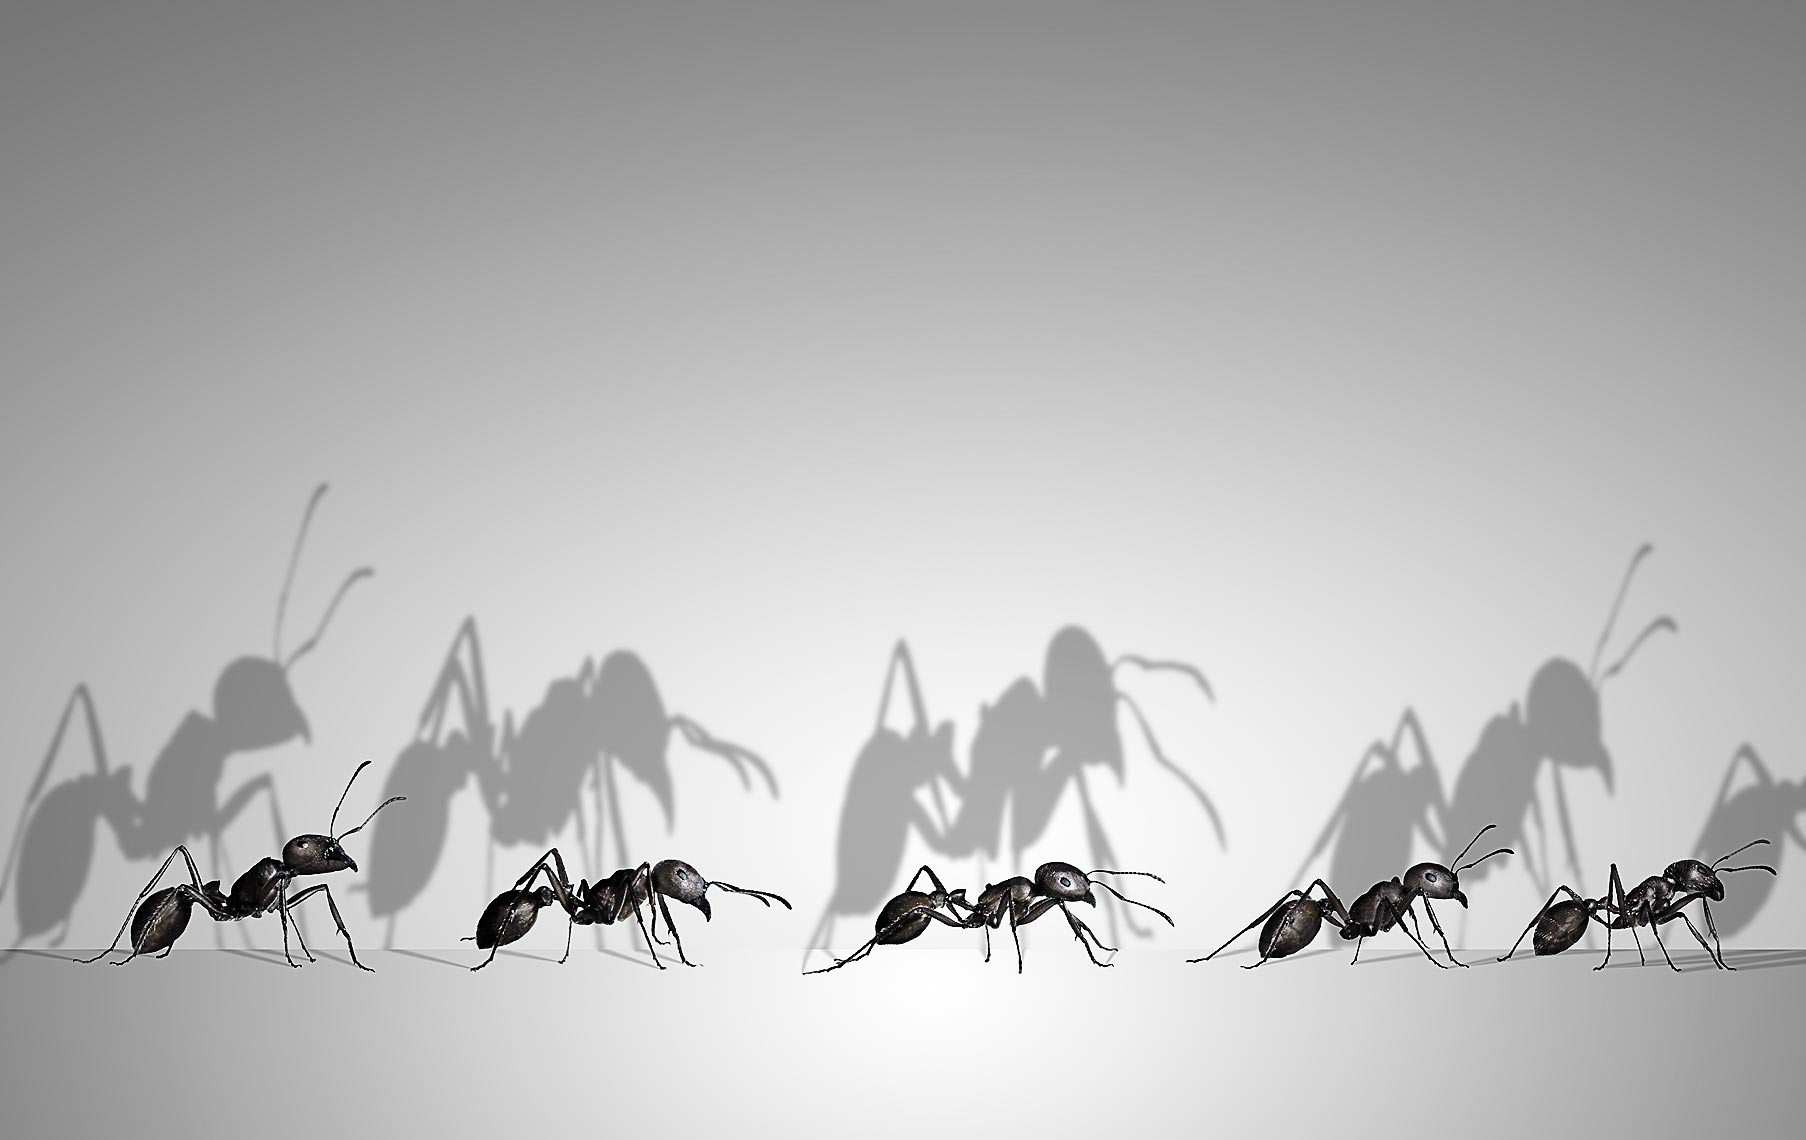 Ants marching in a line photo-illustration by John Kuczala